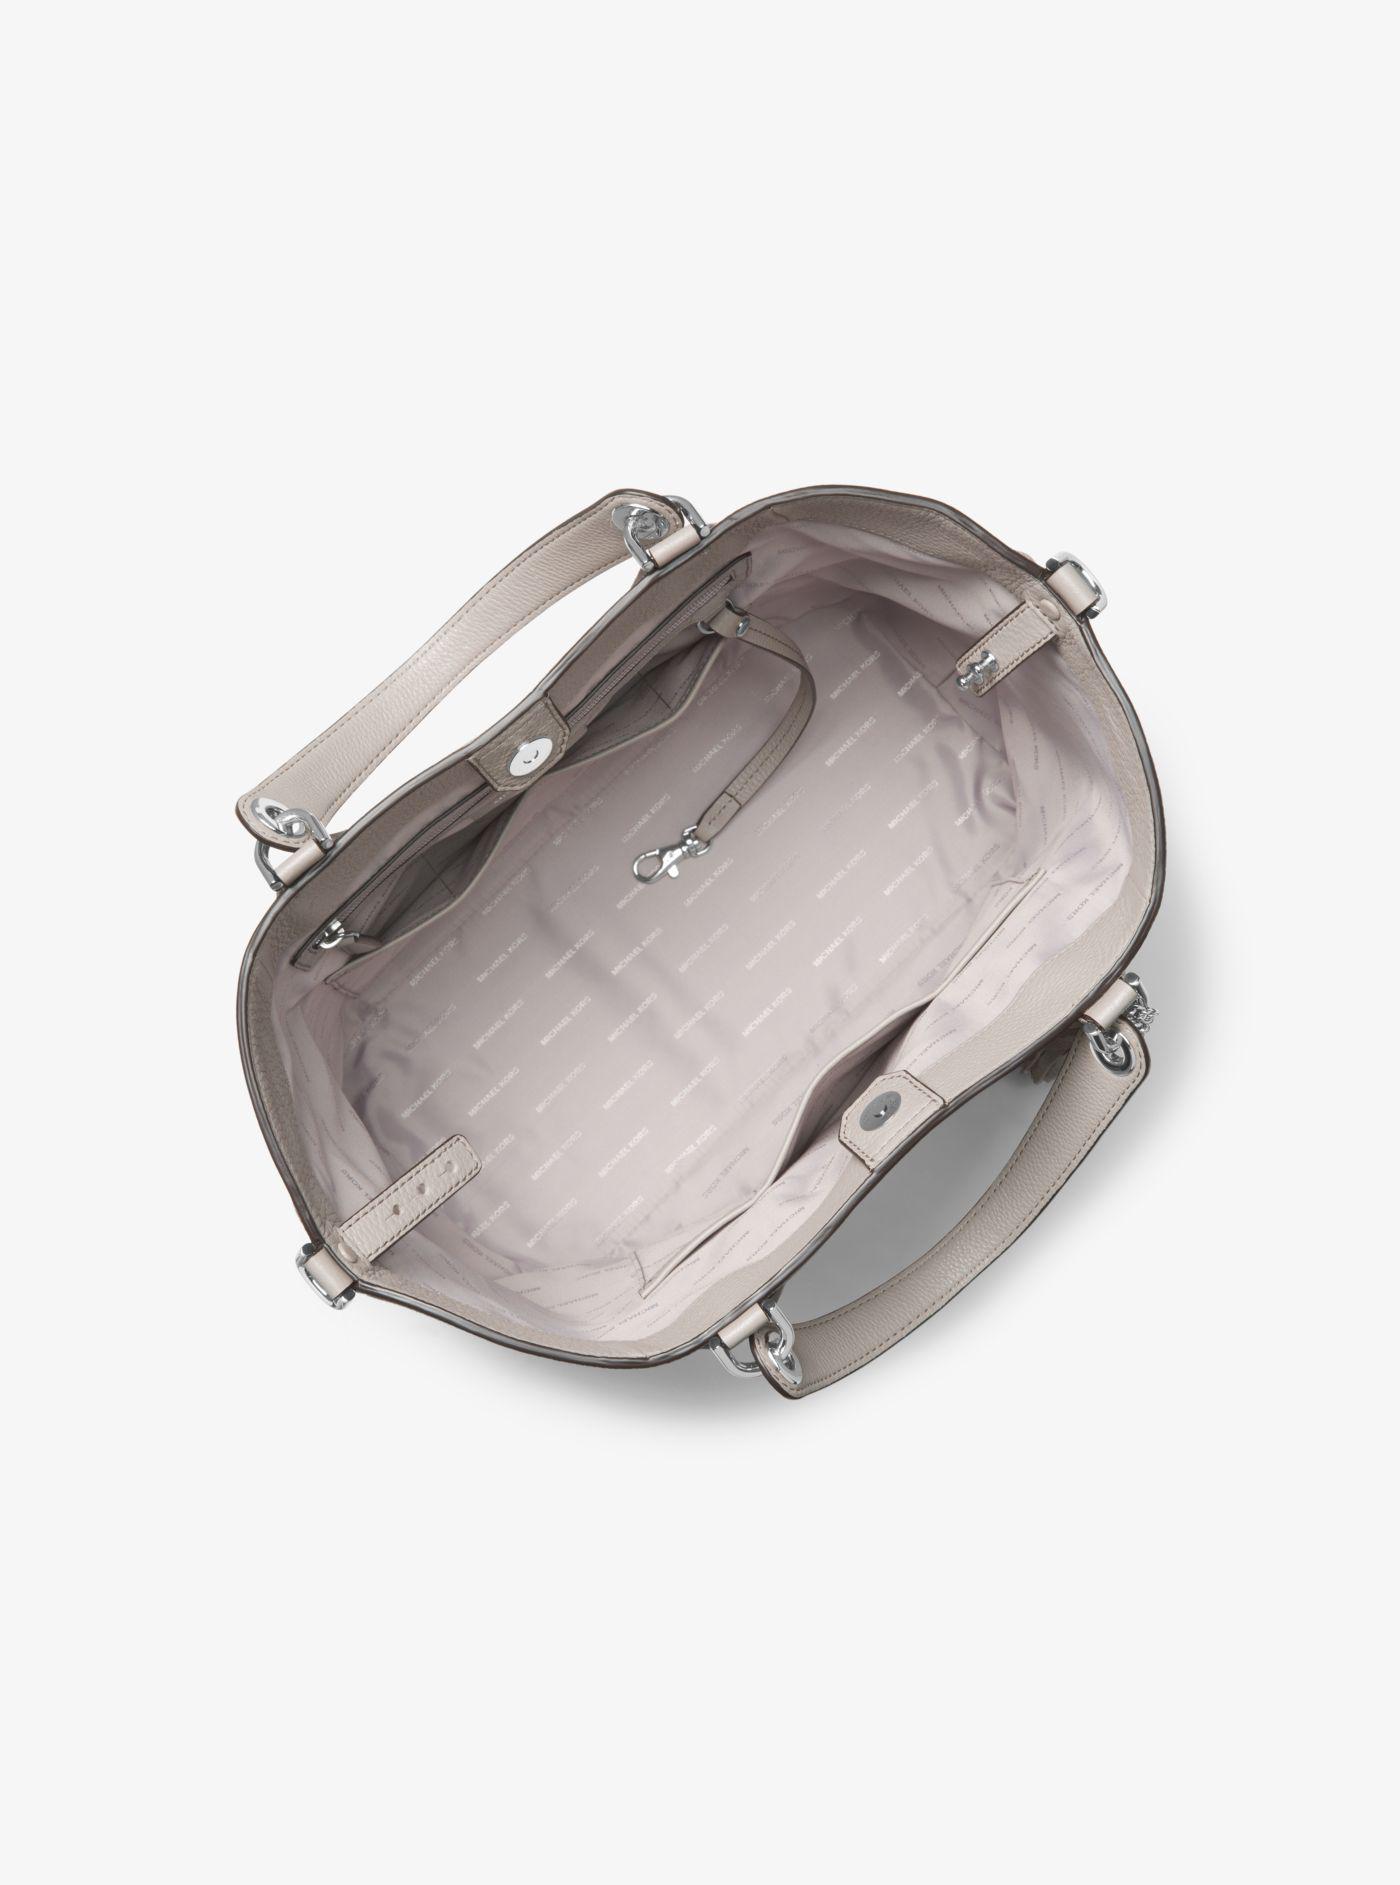 Michael Kors Brooklyn Large Leather Satchel in Pearl Grey (Gray) - Lyst